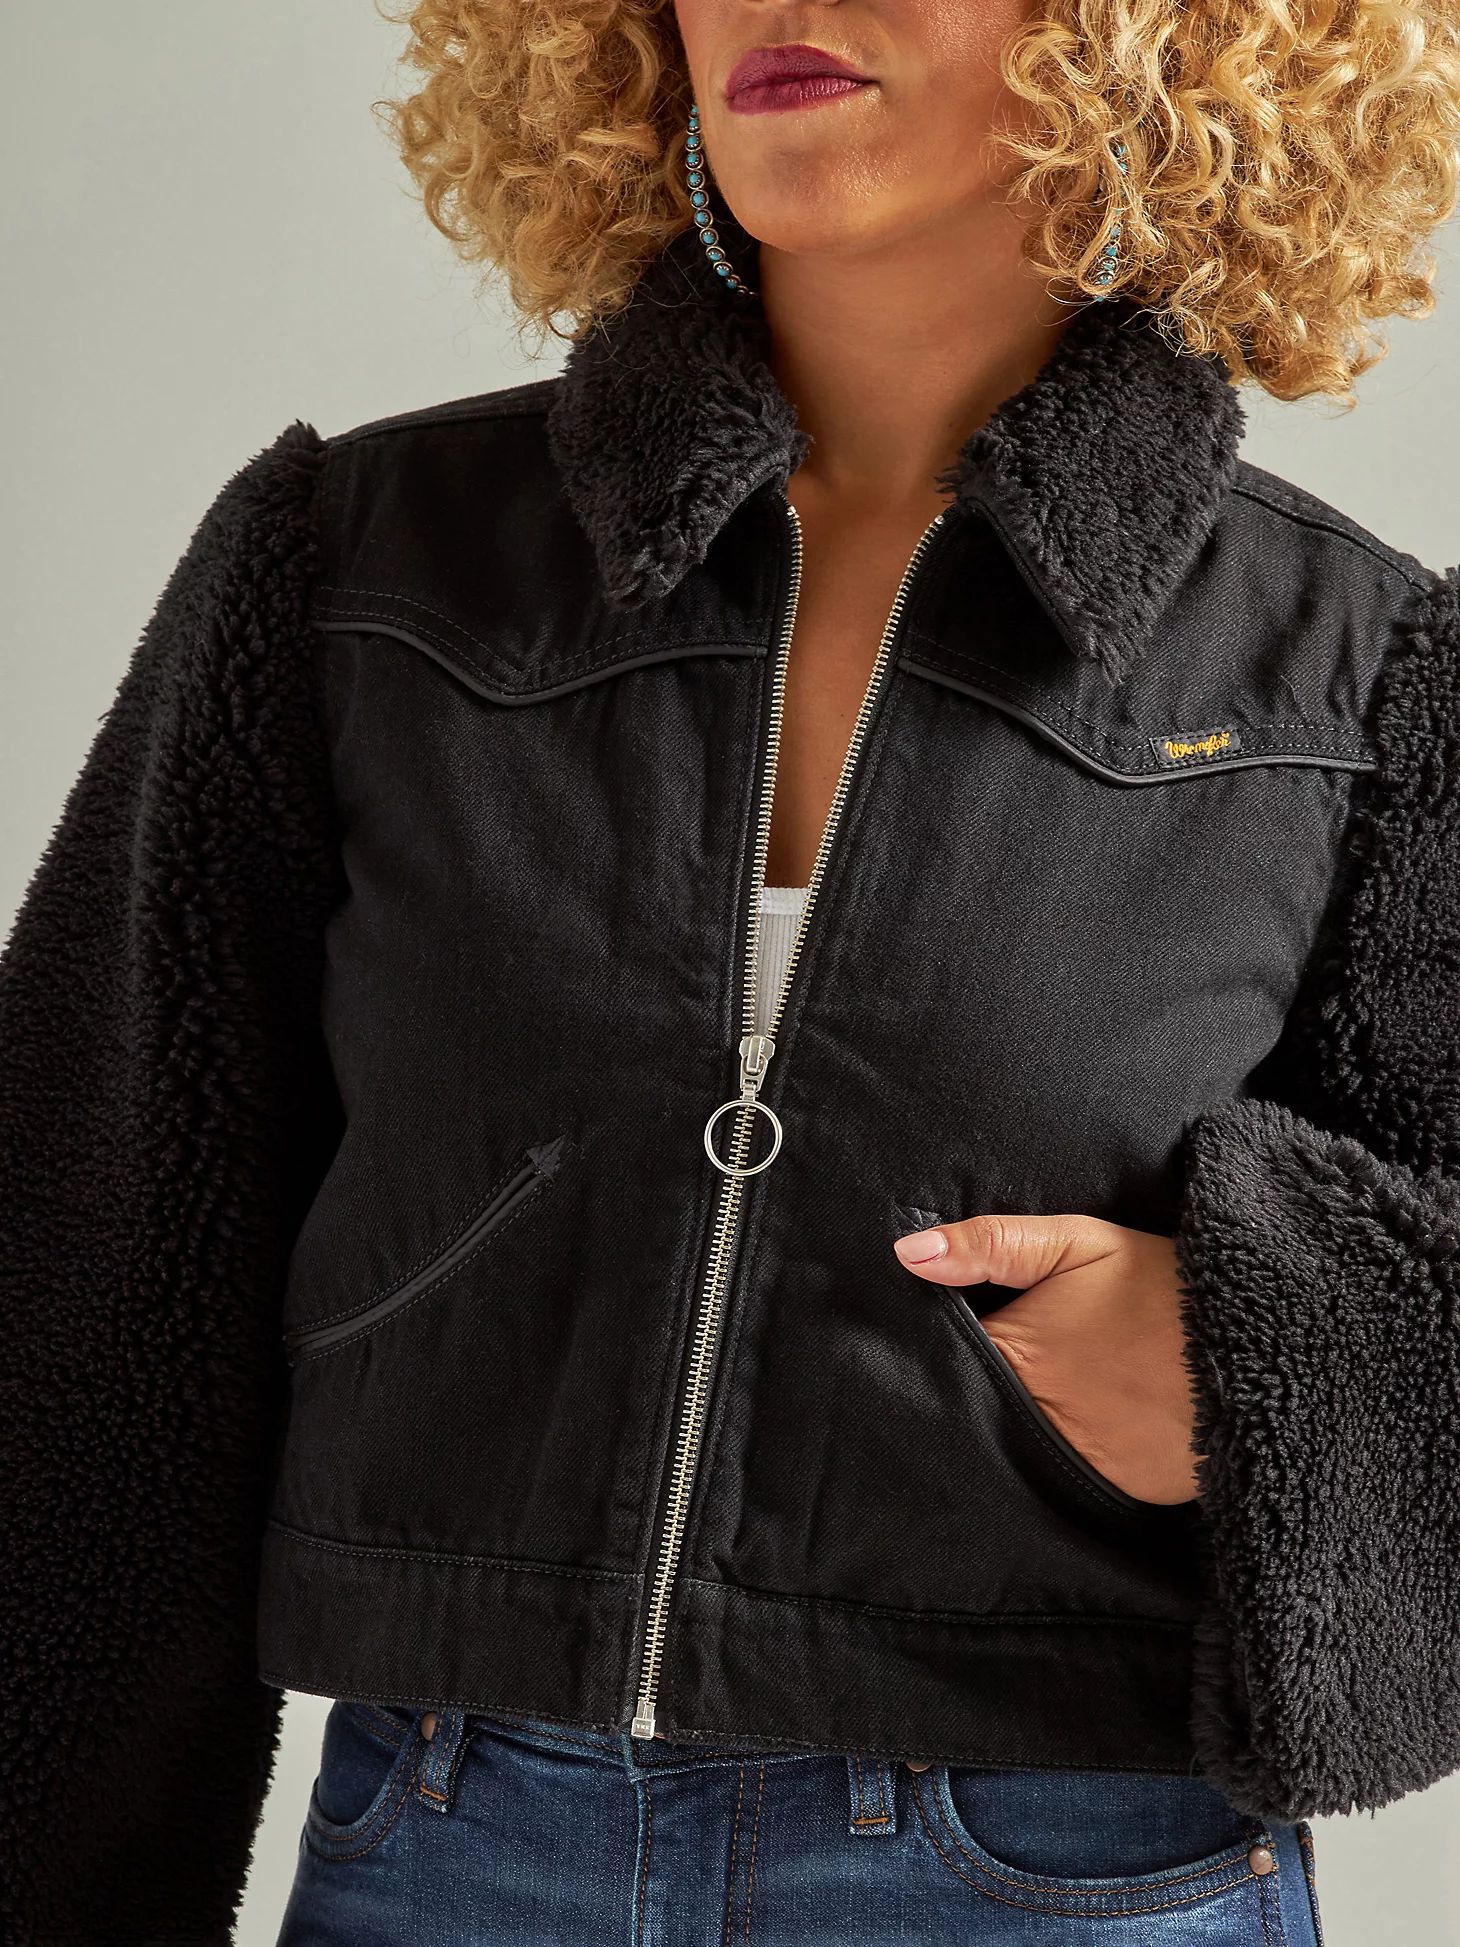 Women's Wrangler Retro® Denim Contrast Sleeve Jacket in Black | Wrangler